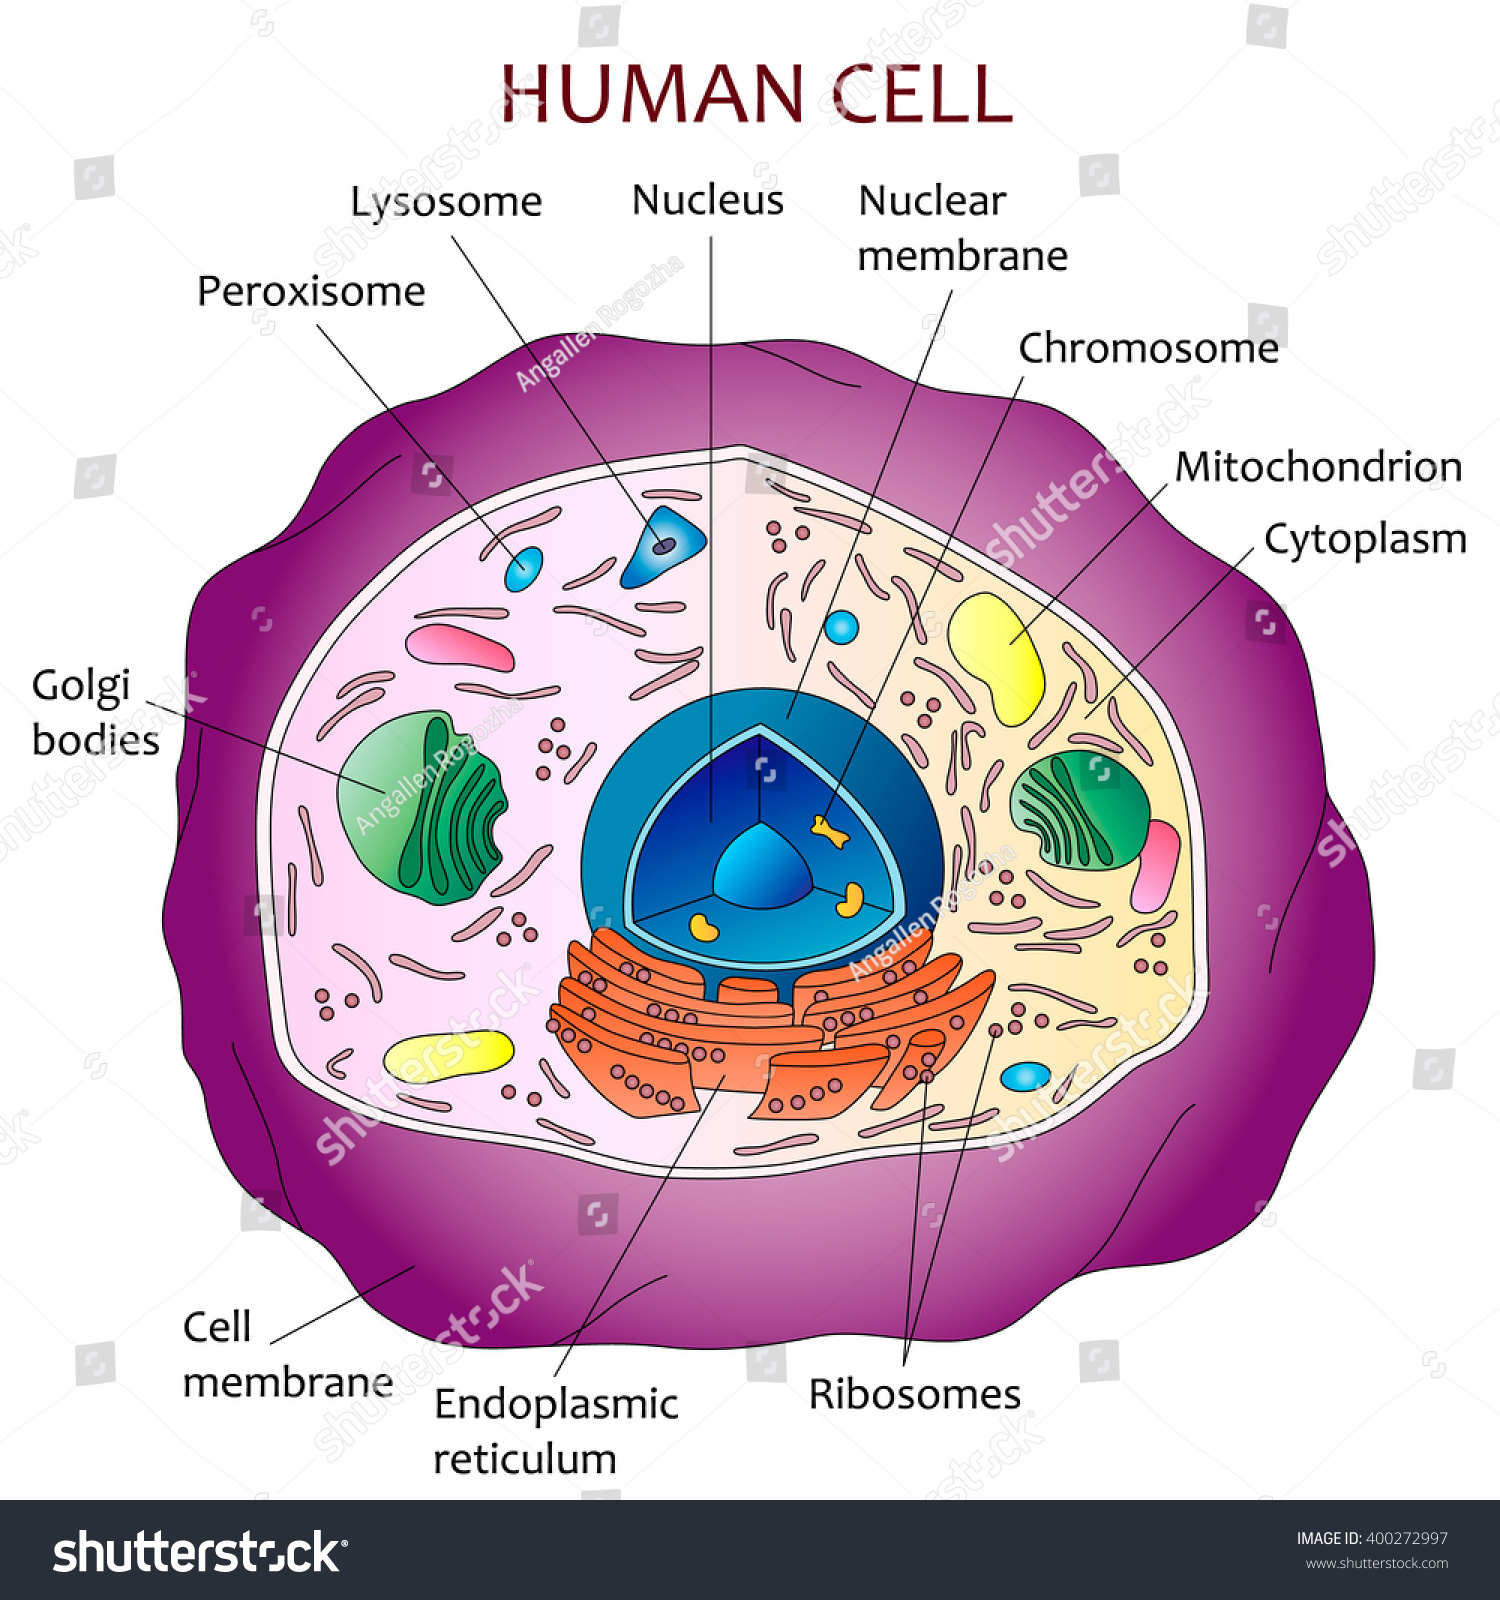 Human Cell Diagram Stock Vector 400272997 : Shutterstock